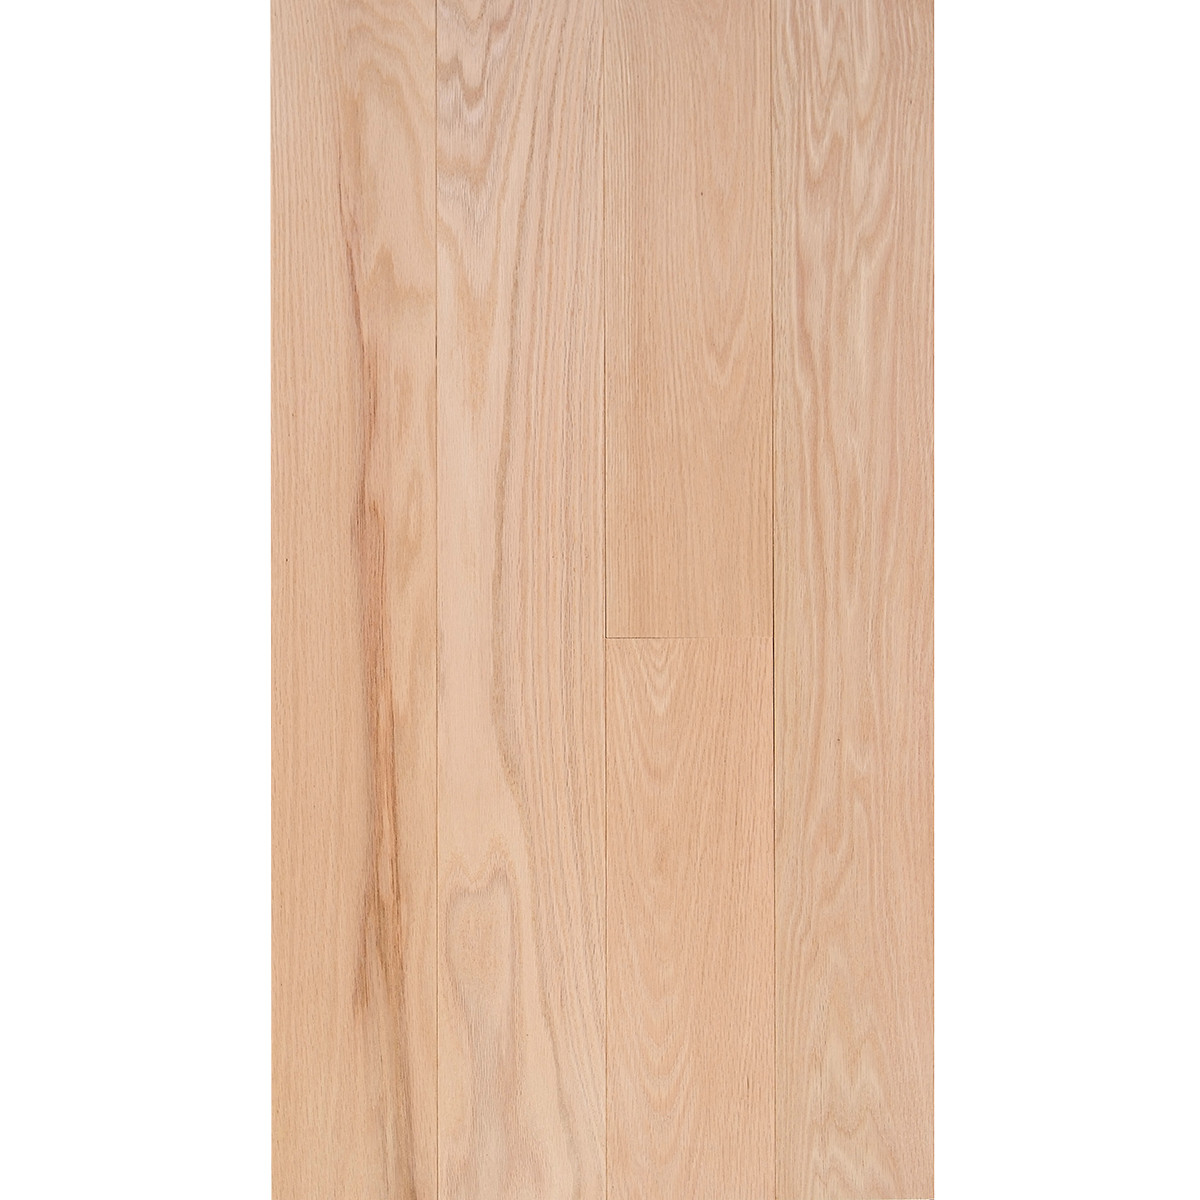 golden hickory hardwood flooring of red oak 3 4 x 5 select grade flooring throughout fs 5 redoak select em flooring